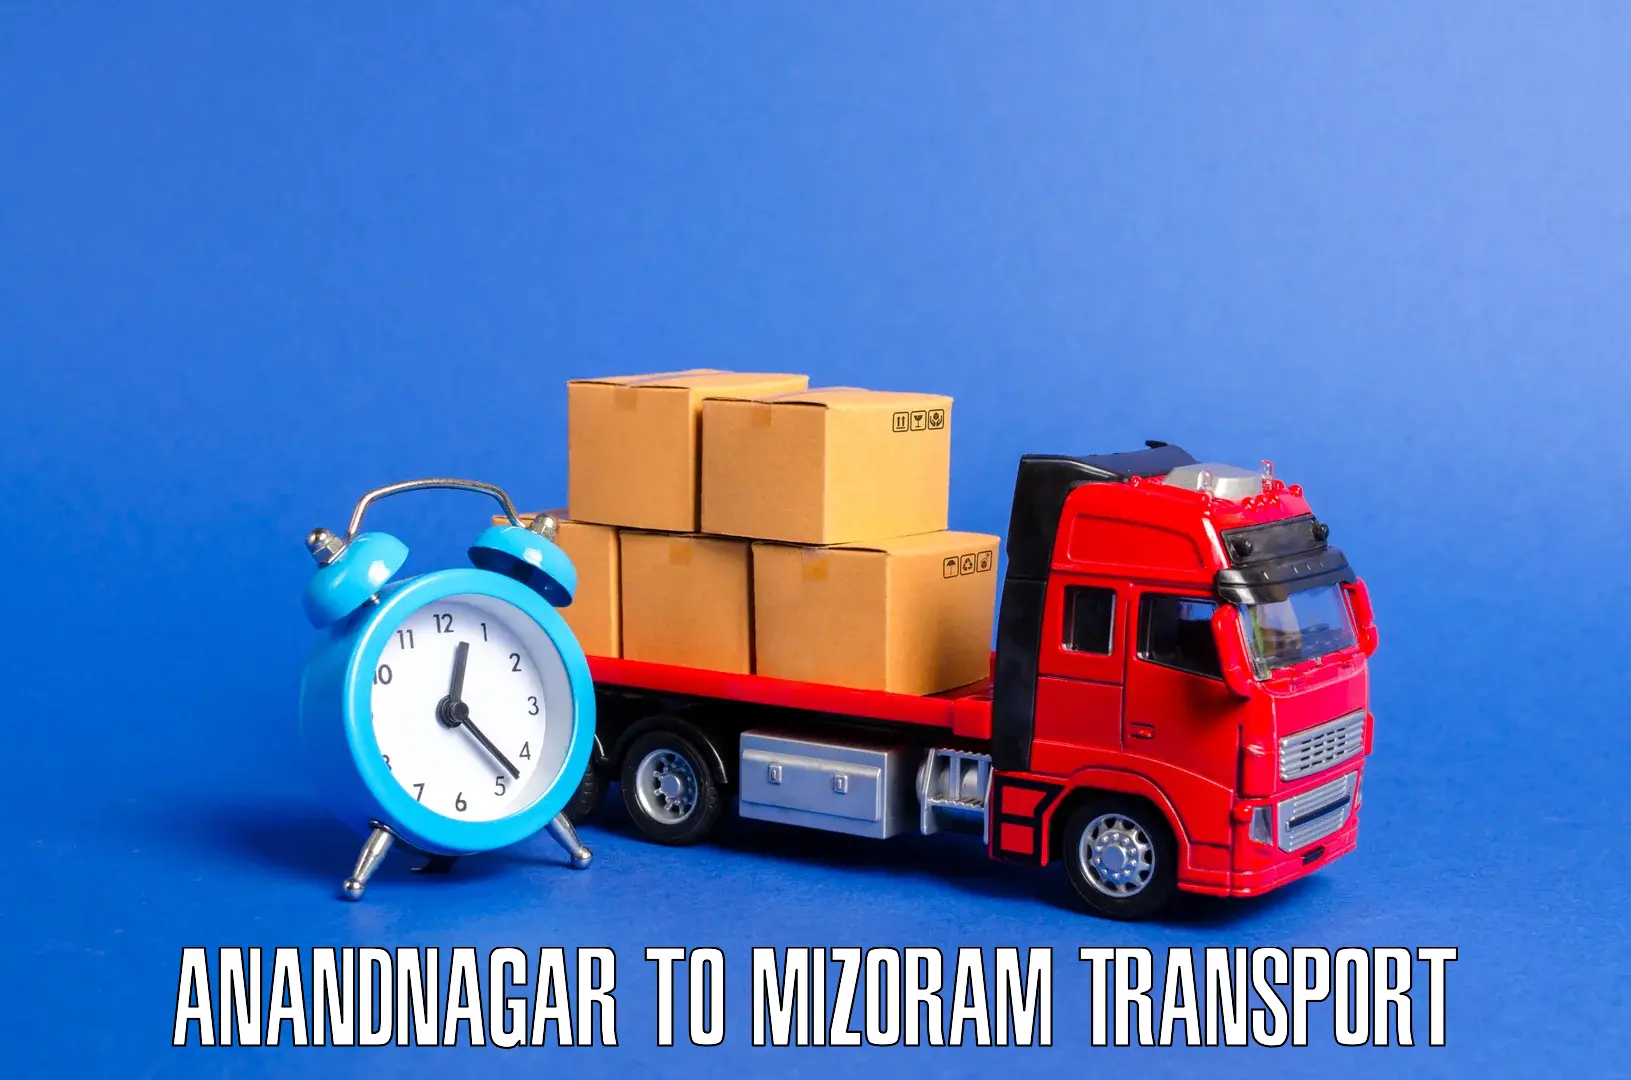 Cycle transportation service Anandnagar to Aizawl